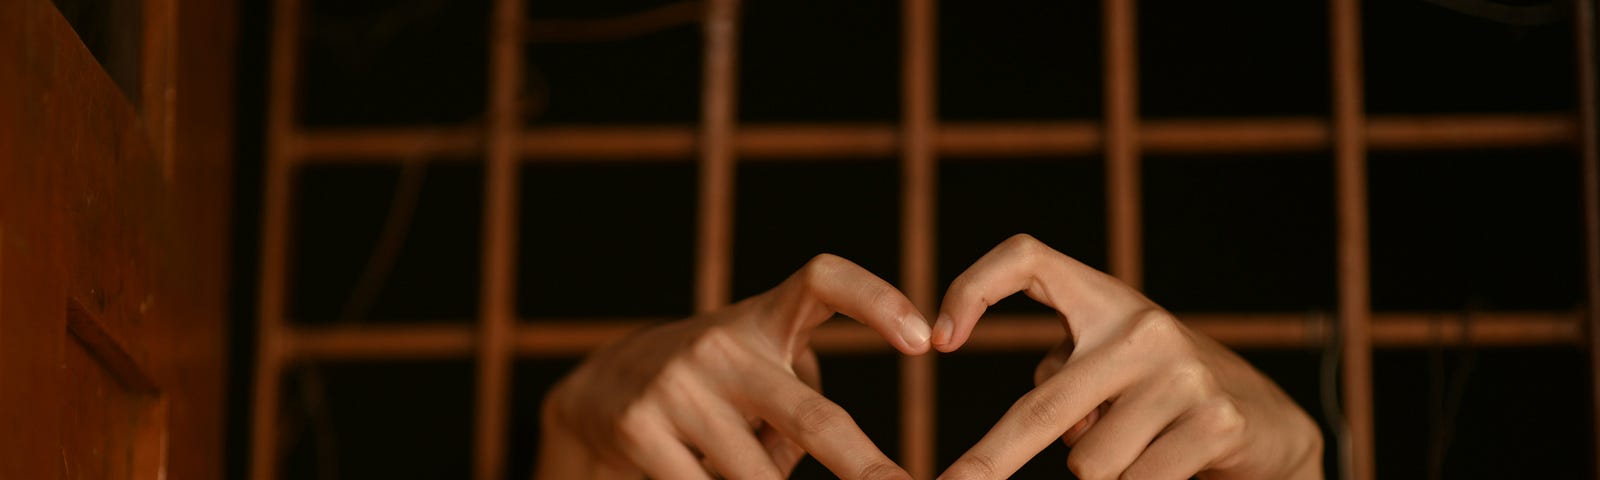 Hands reaching through a prison gate forming a heart